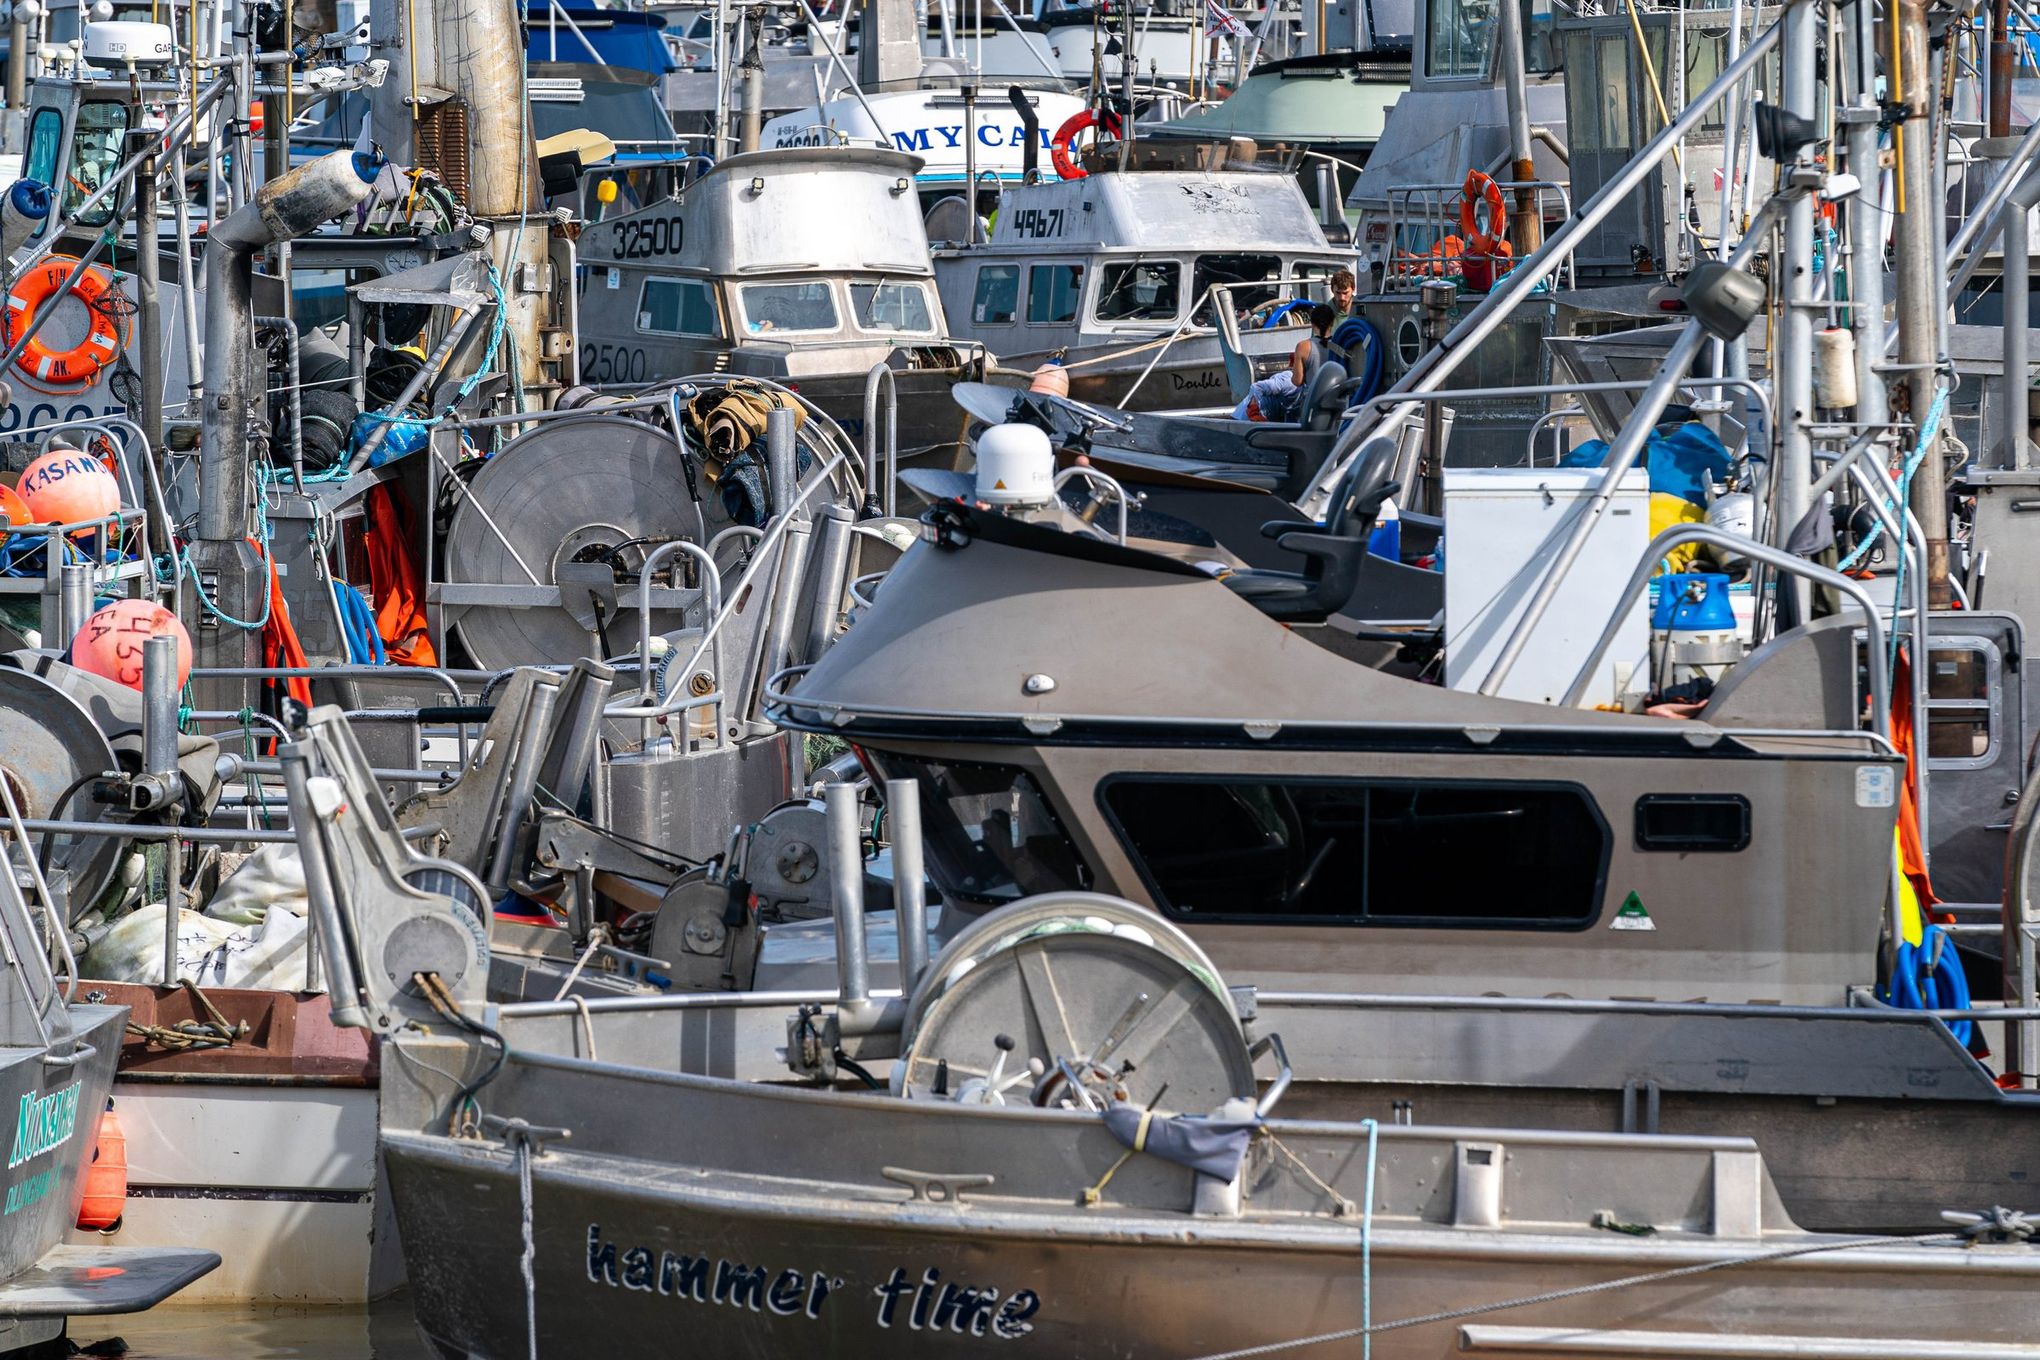 Villages lose lucrative Bristol Bay fishing permits to Alaska cities, WA